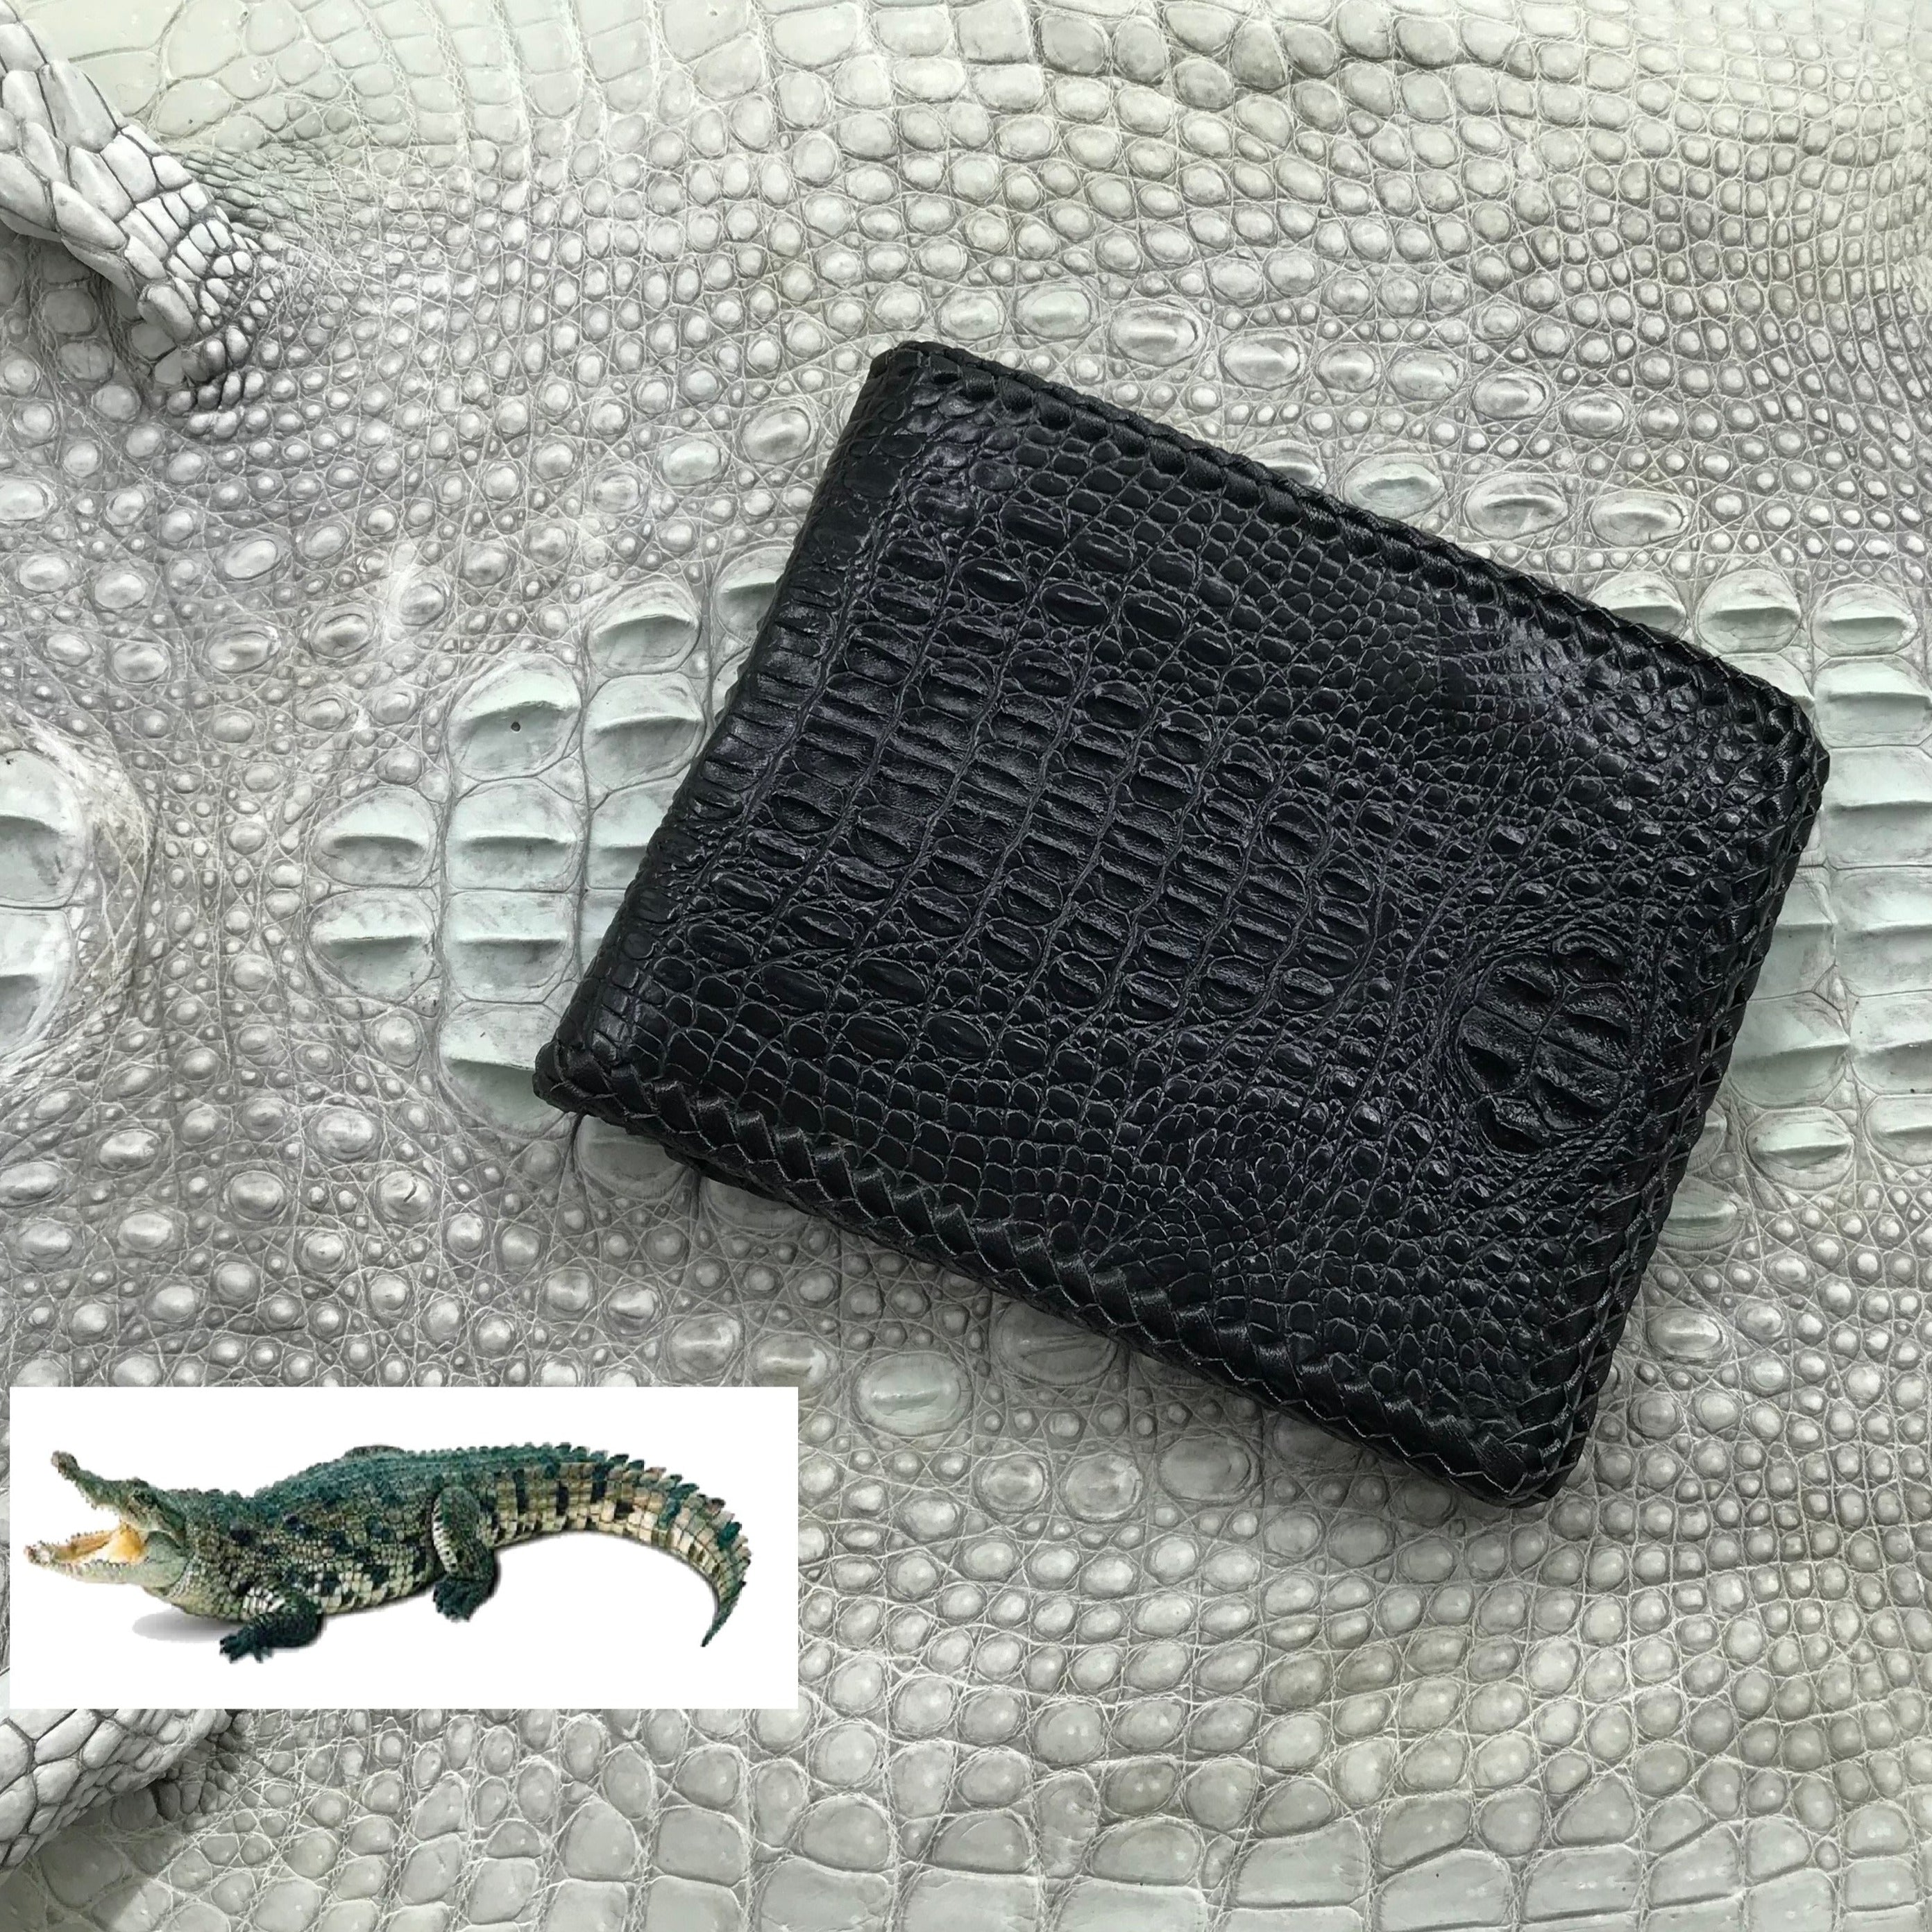 Bespoke Black Crocodile Leather Wallet, Bilfold, Card Holder